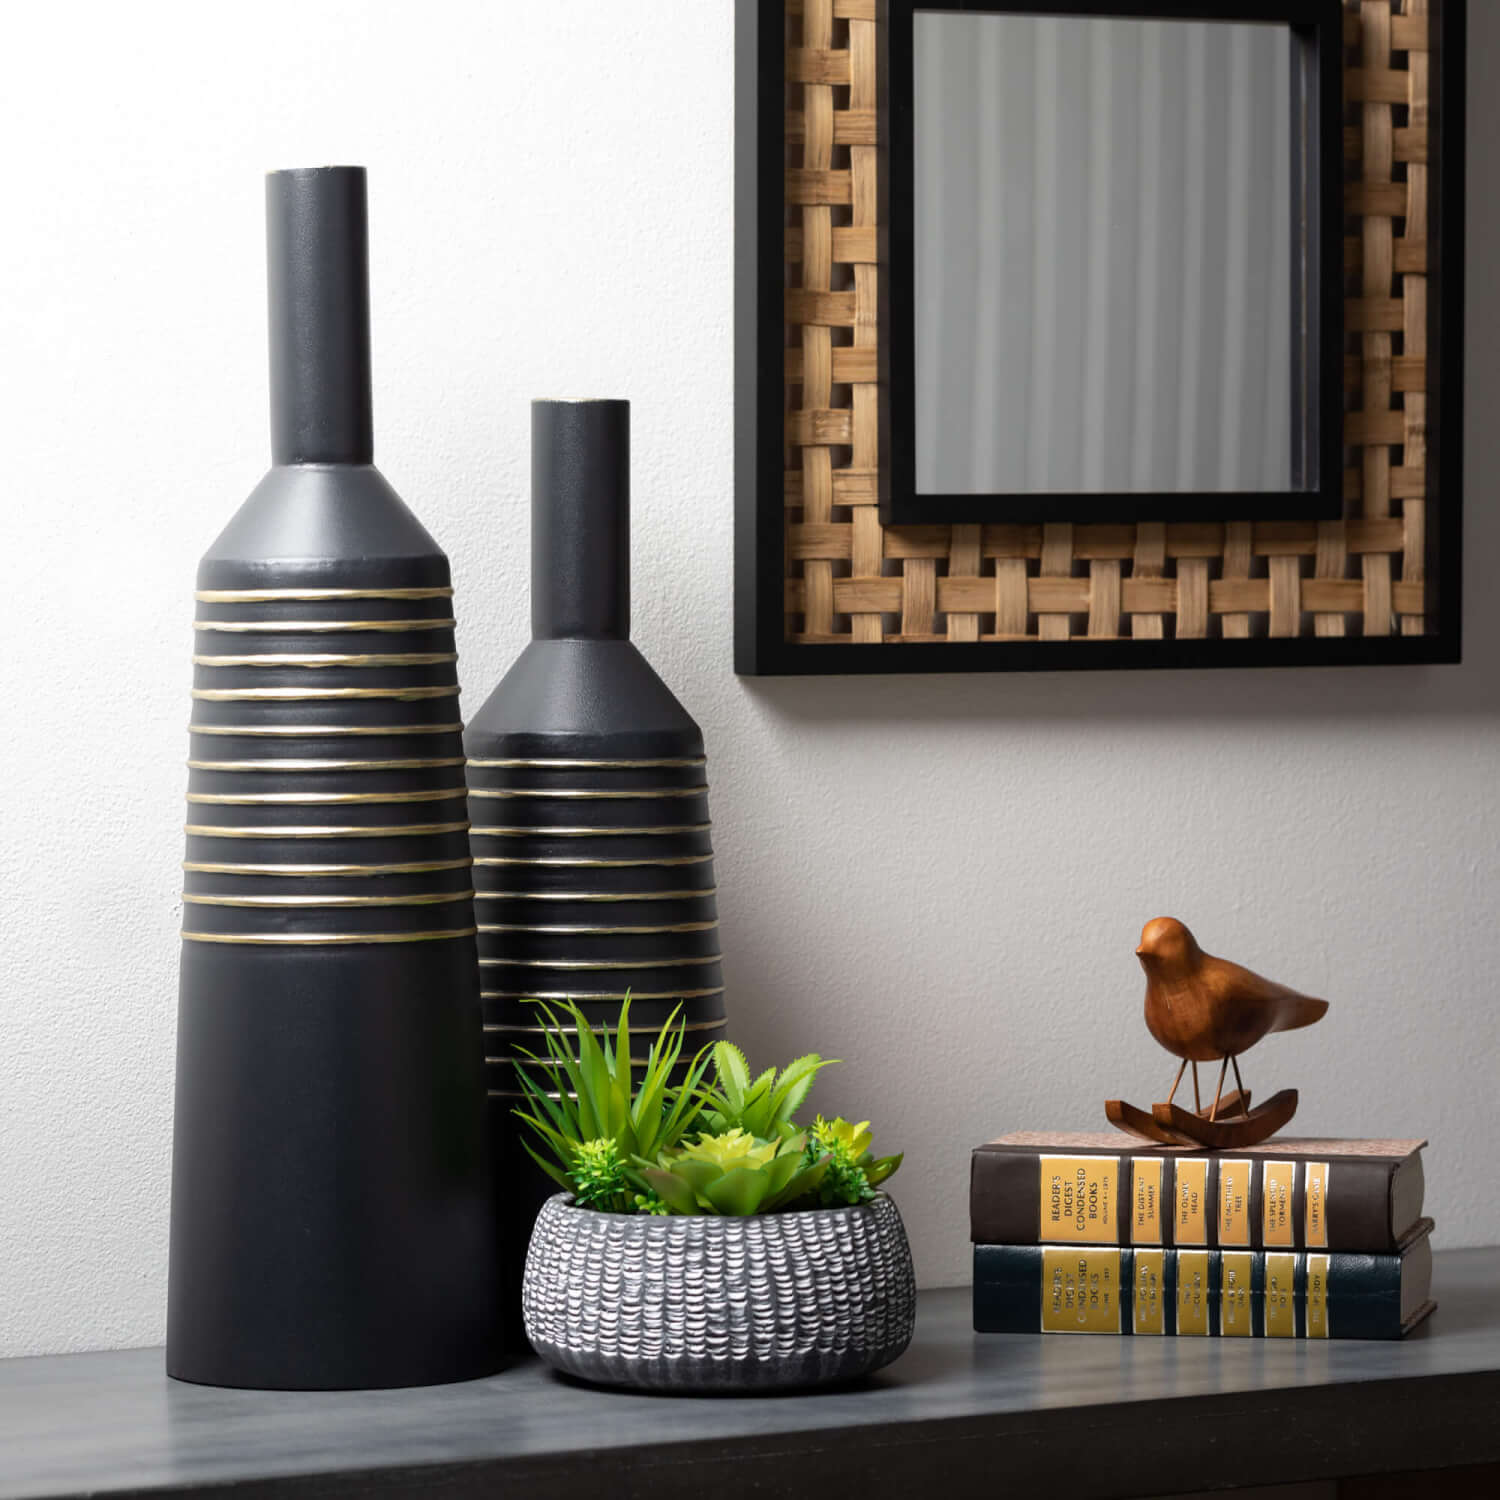 Matte Black Vases With Gold Lines Elevate Home Decor - Vases